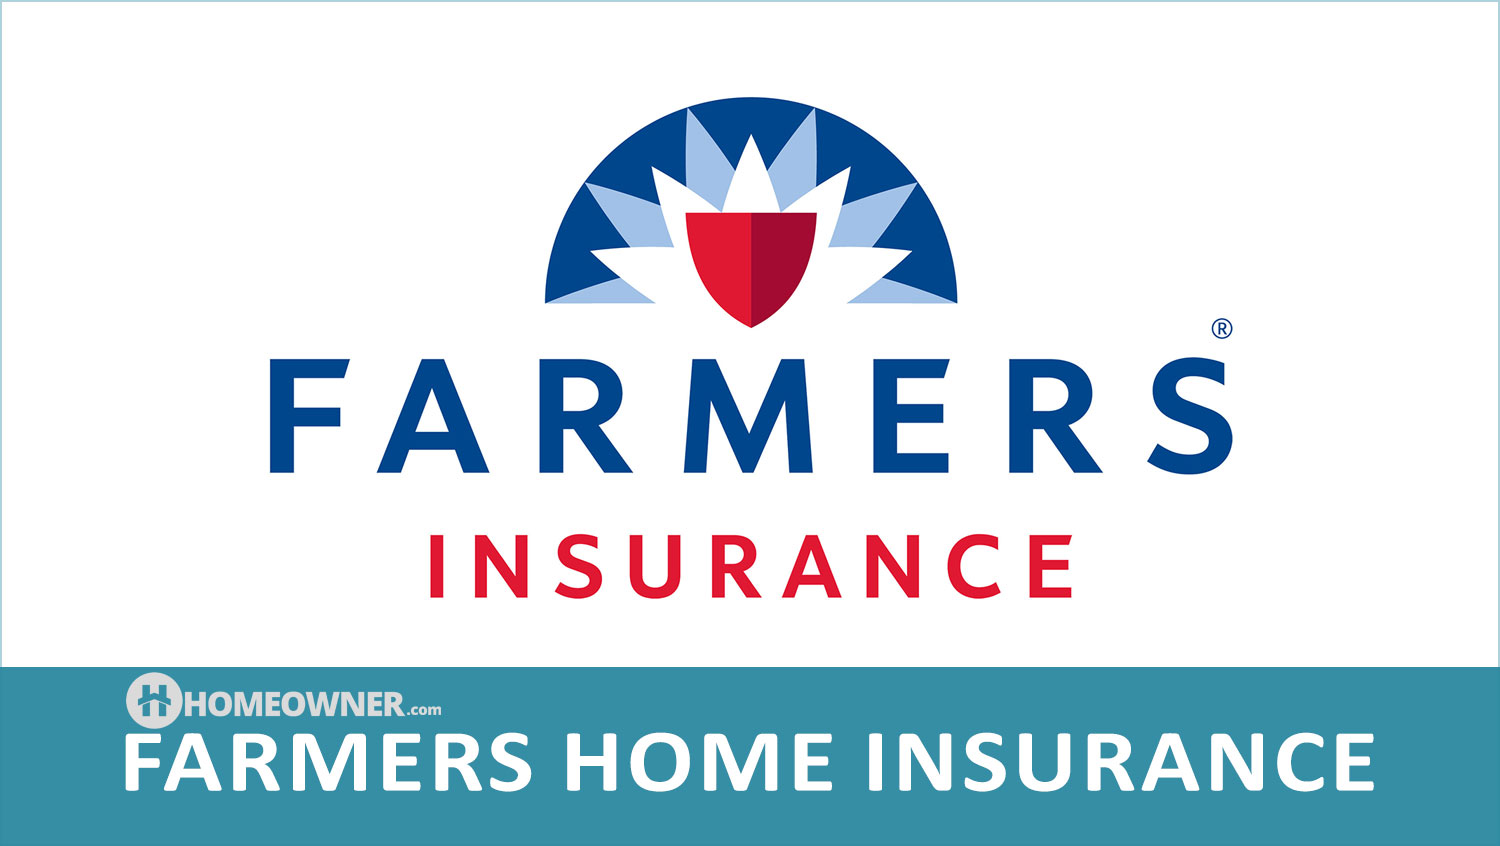 Farmers Home Insurance - 2023 Homeowners Guide